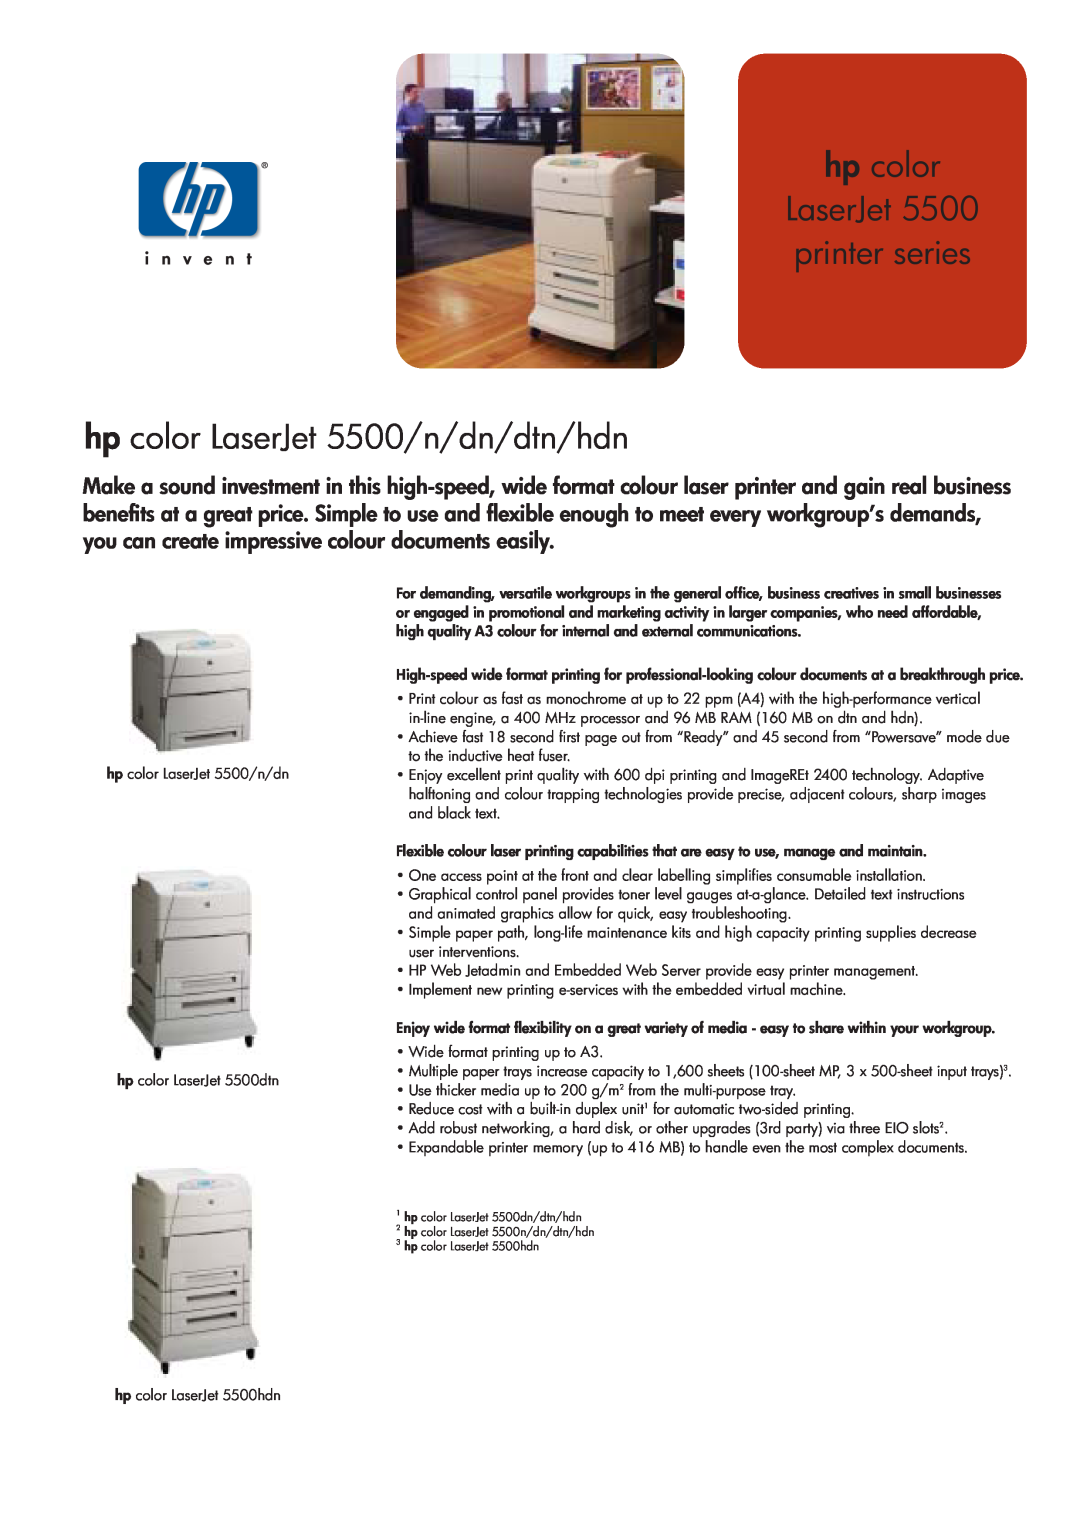 IBM manual hp color LaserJet 5500/n/dn/dtn/hdn, LaserJet 5500 printer series 